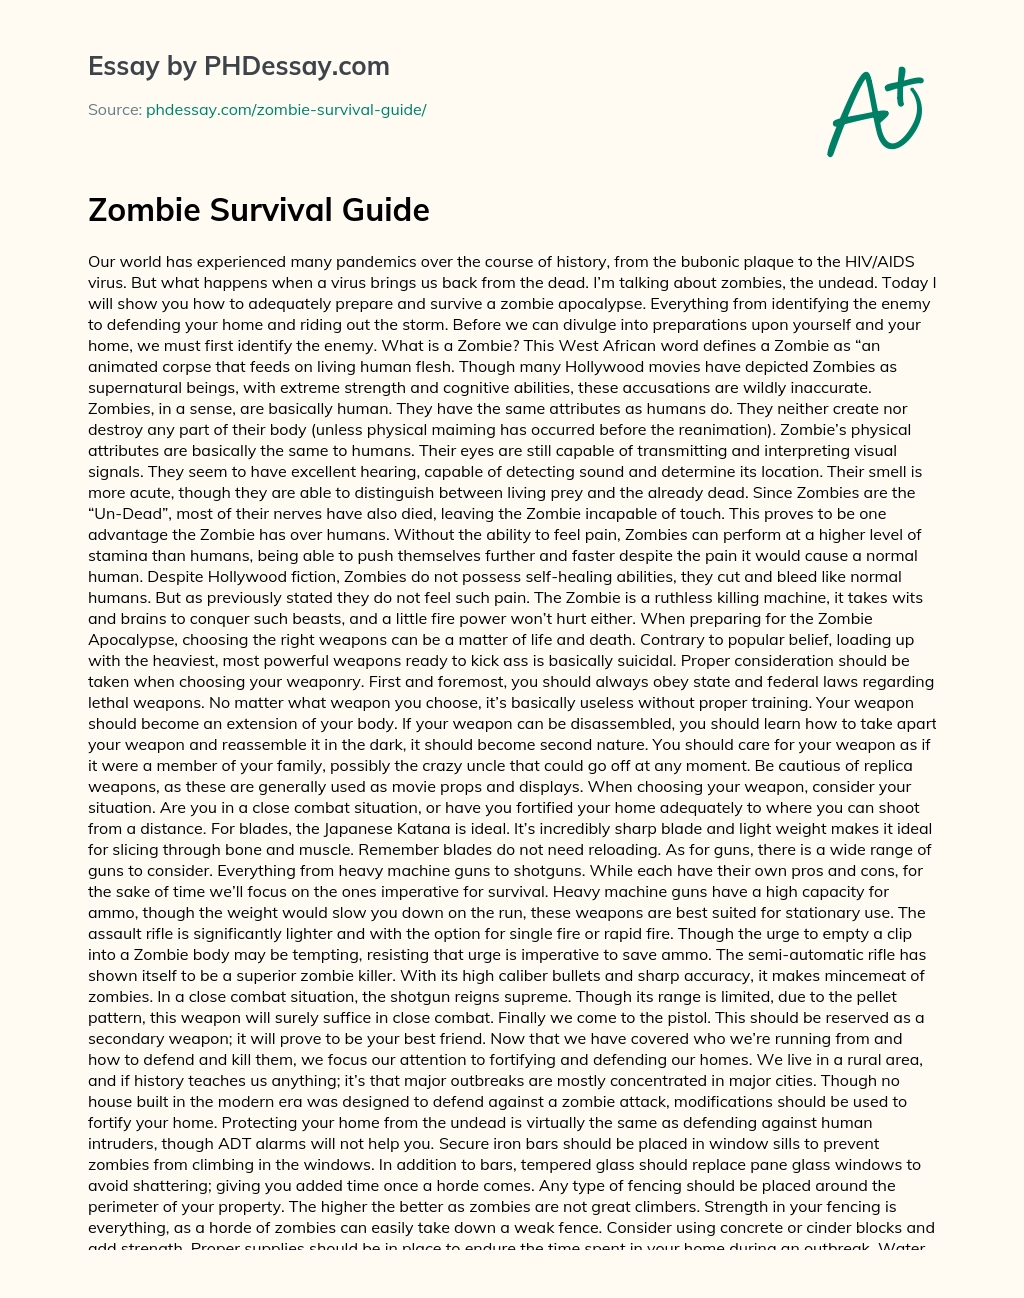 Zombie Survival Guide essay